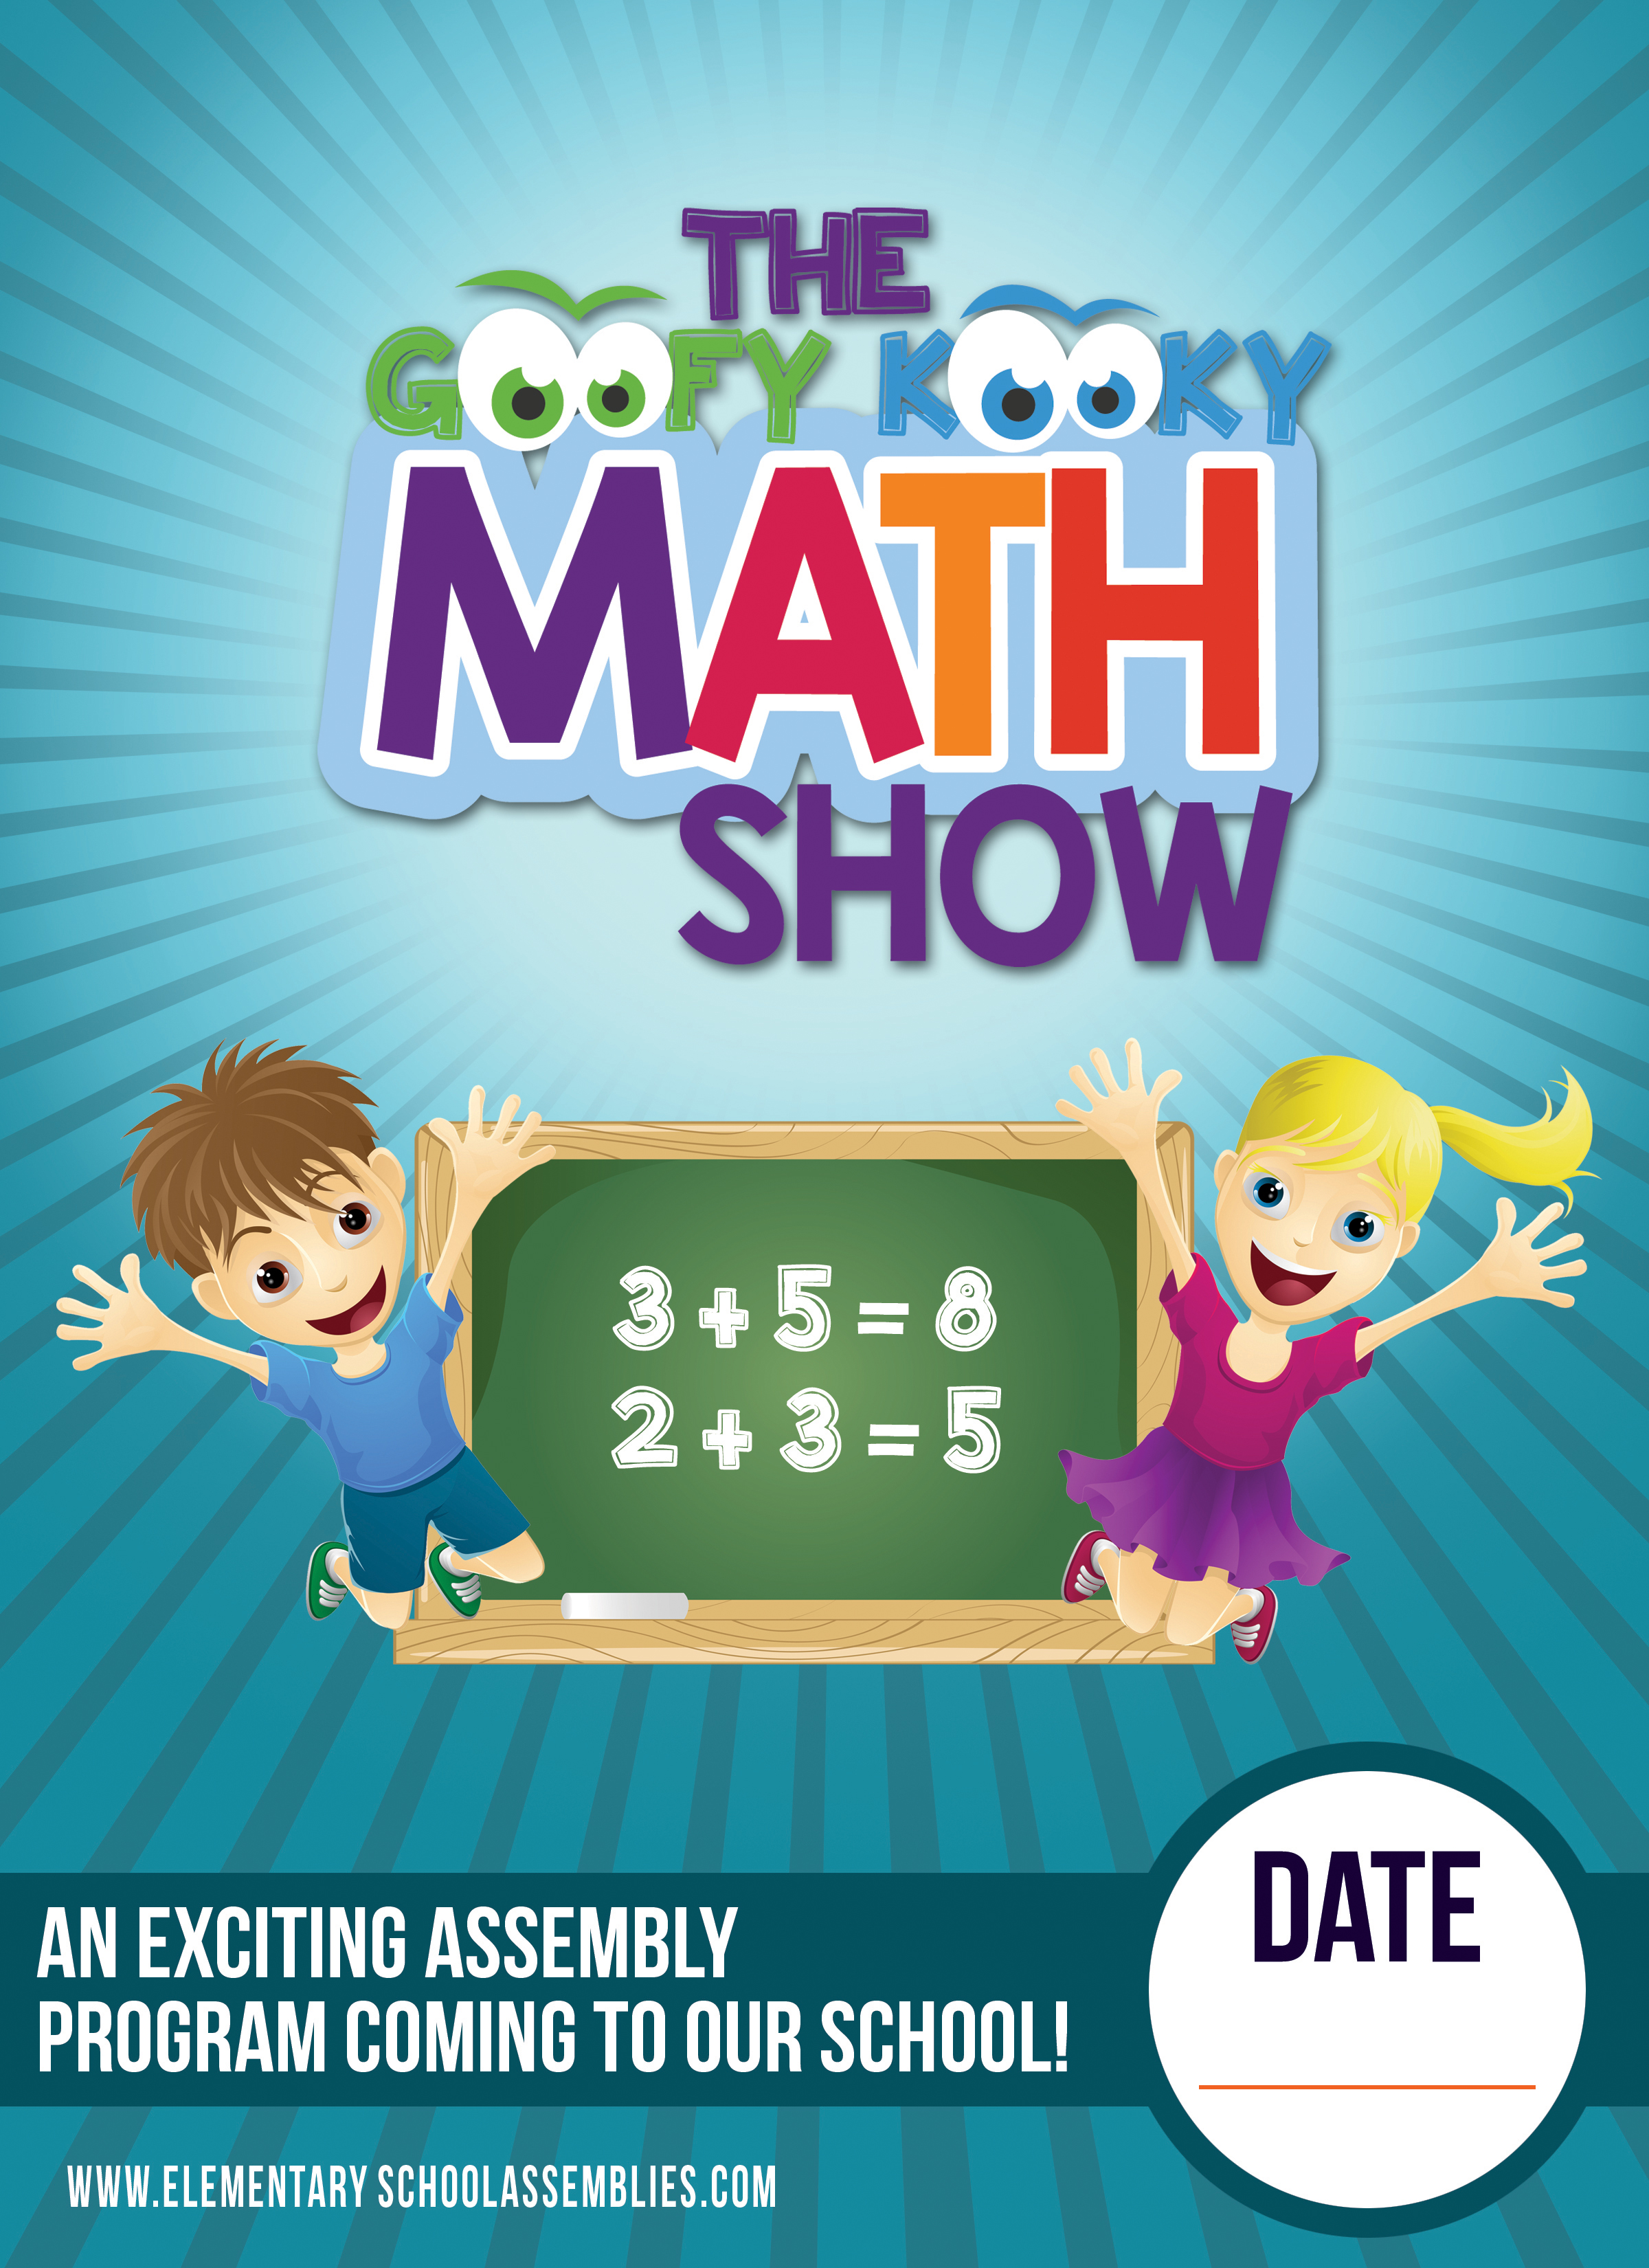 Math school assembly flyer